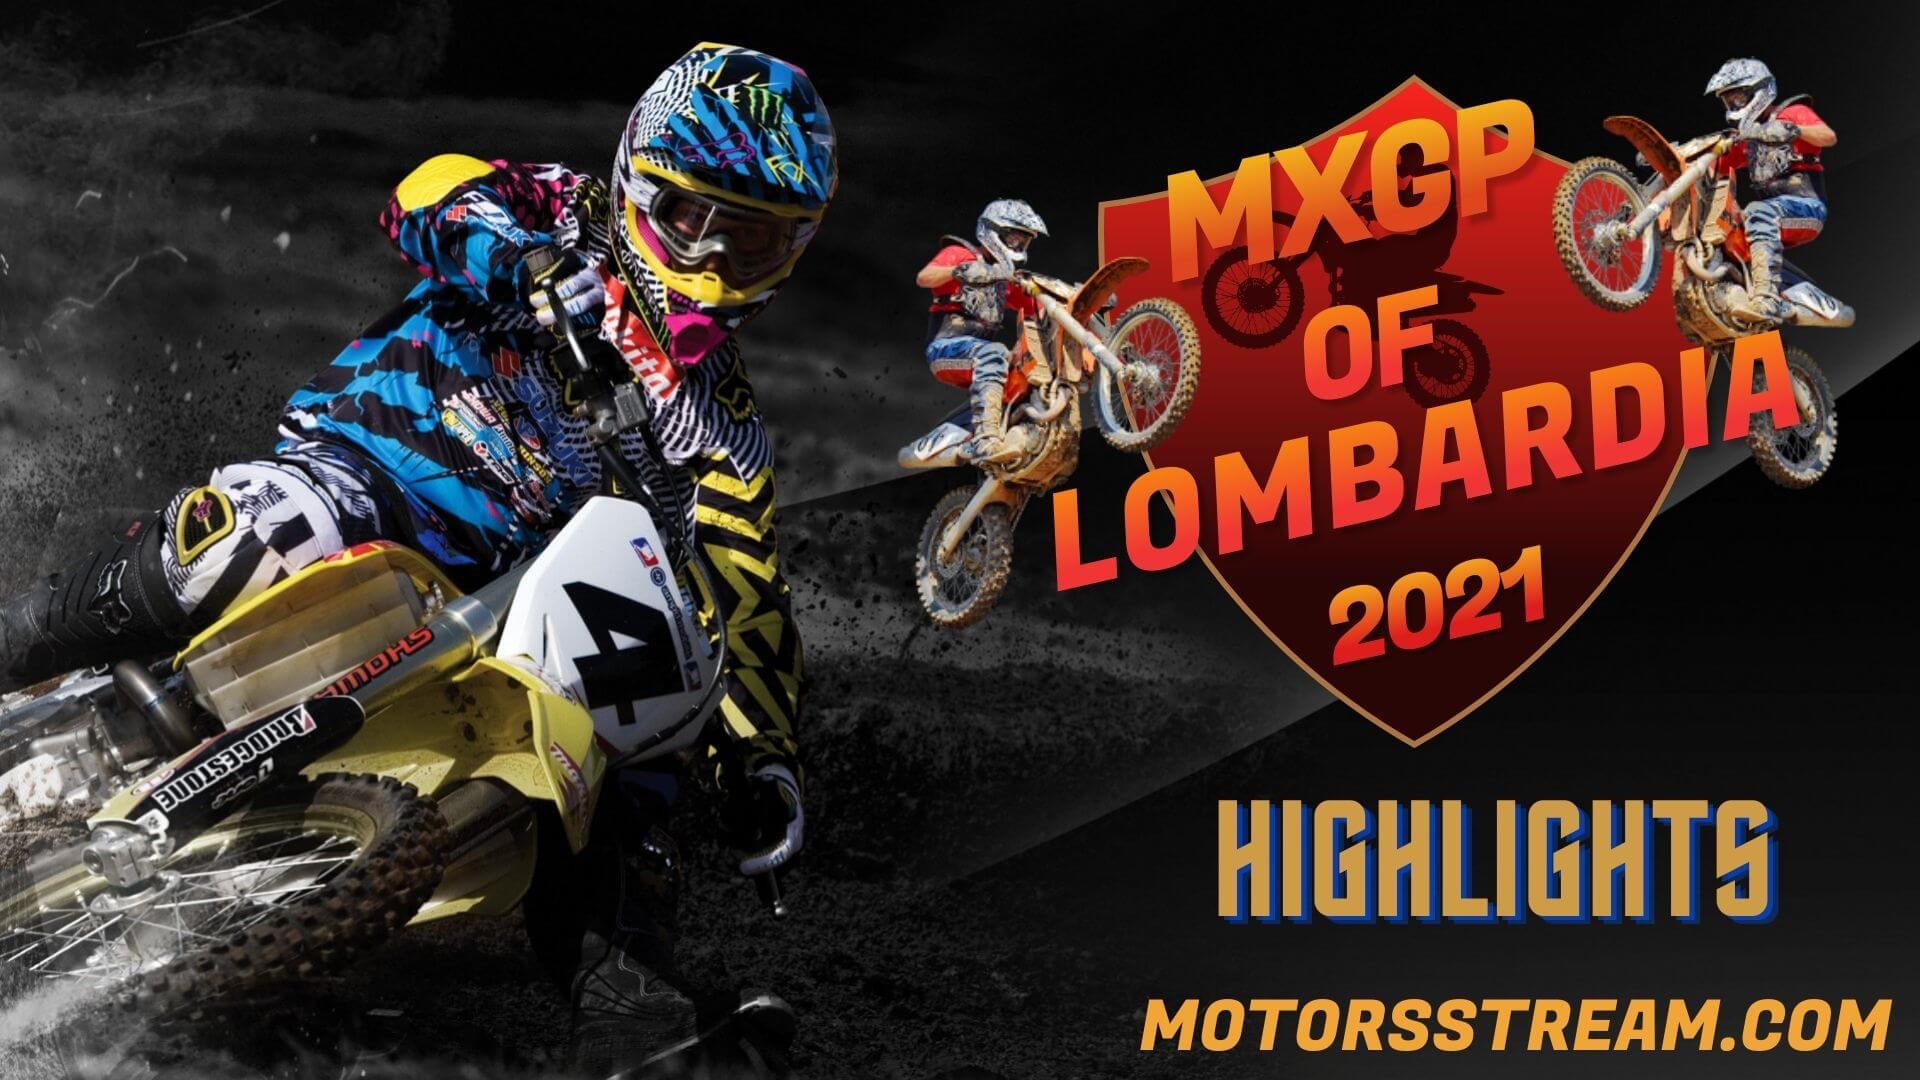 FIM Motocross Lombardia Highlights 2021 MXGP